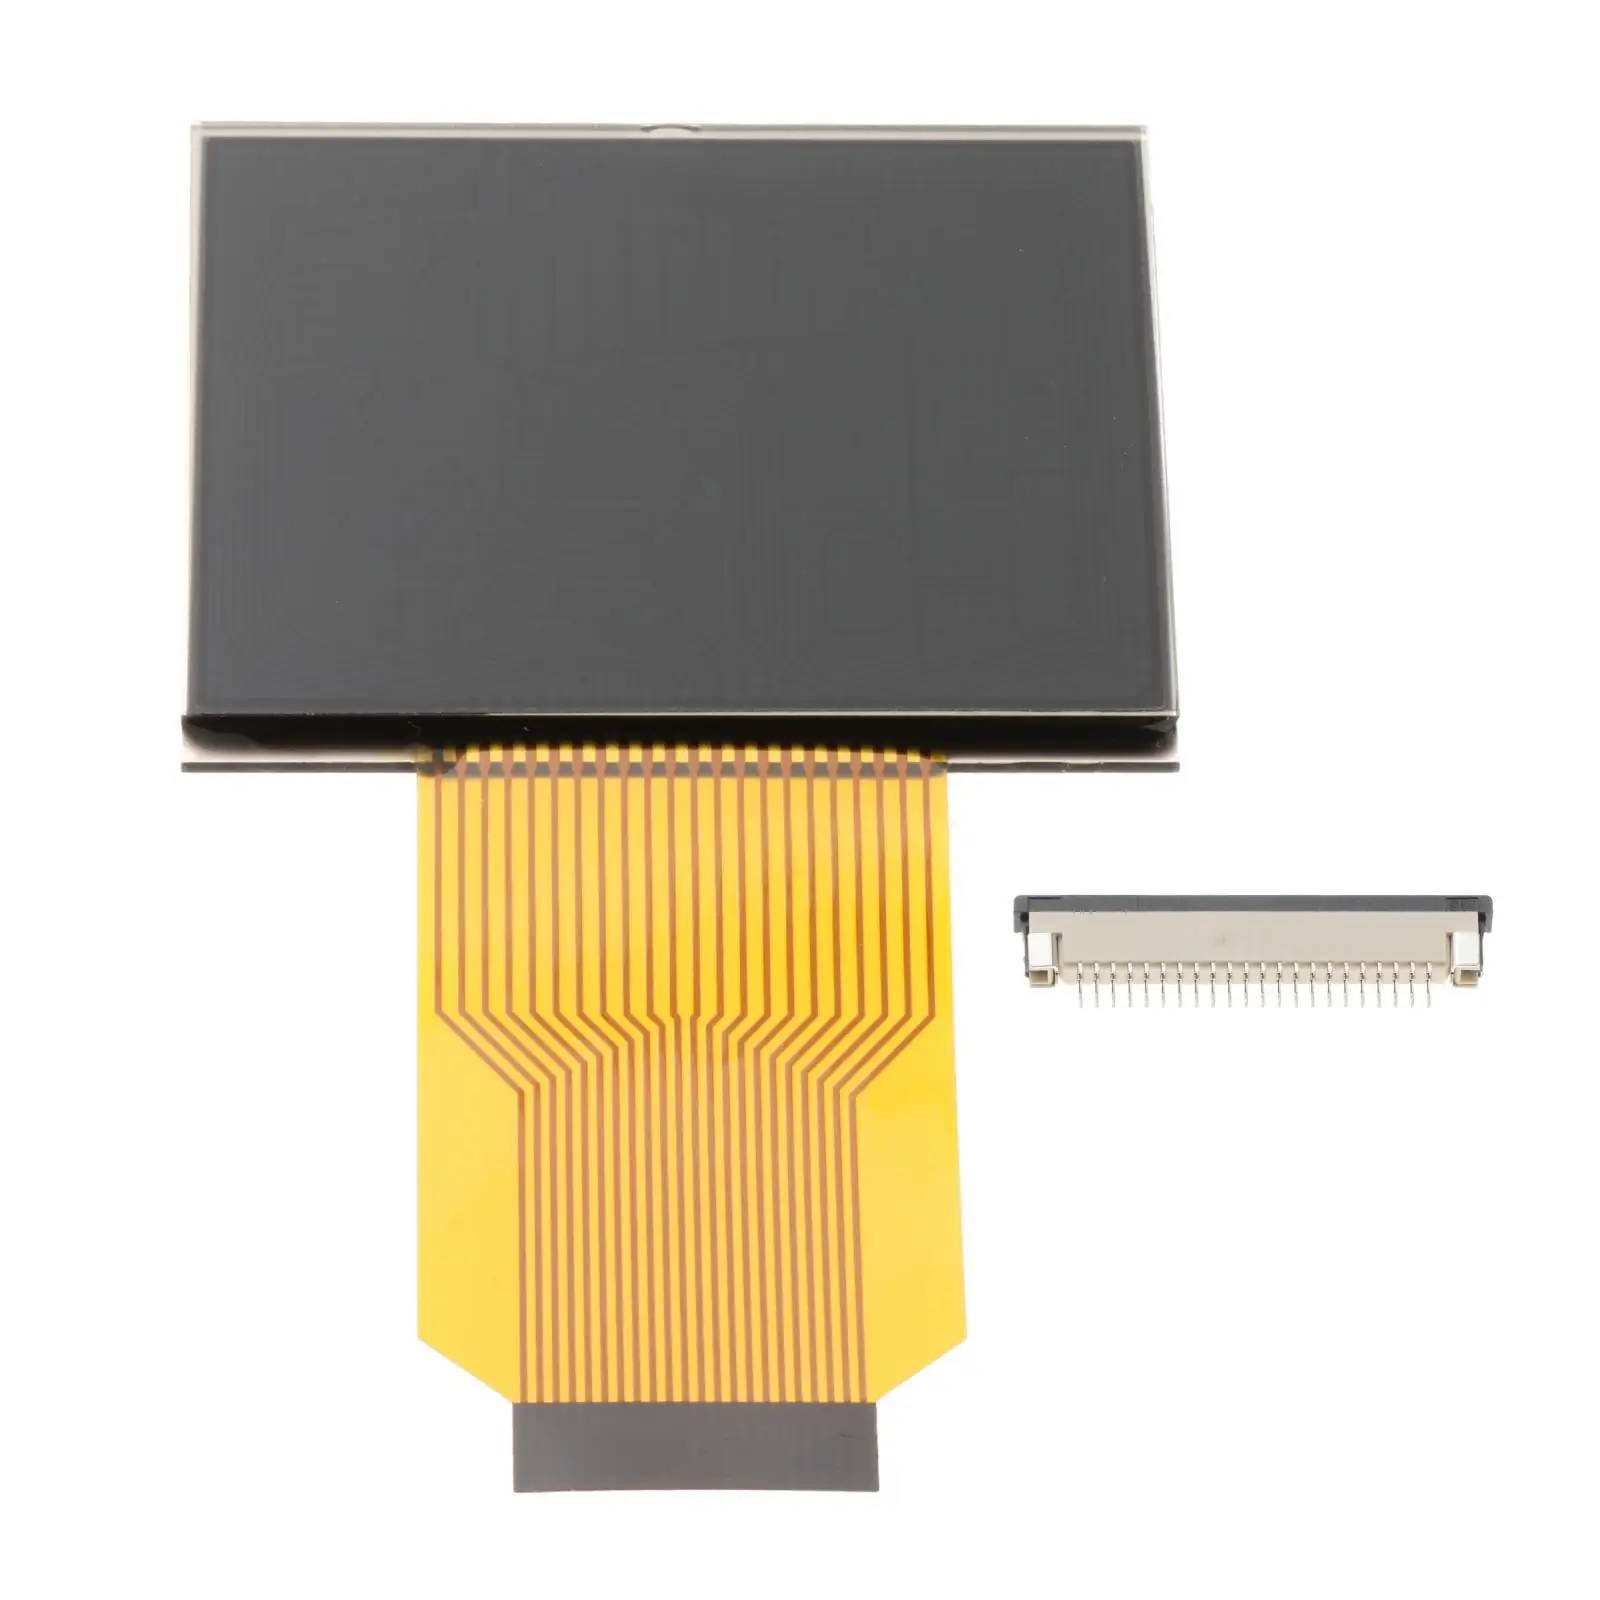 Pixel Repair LCD Screen Car Accessories LCD Display Replace Fits for Saab 93